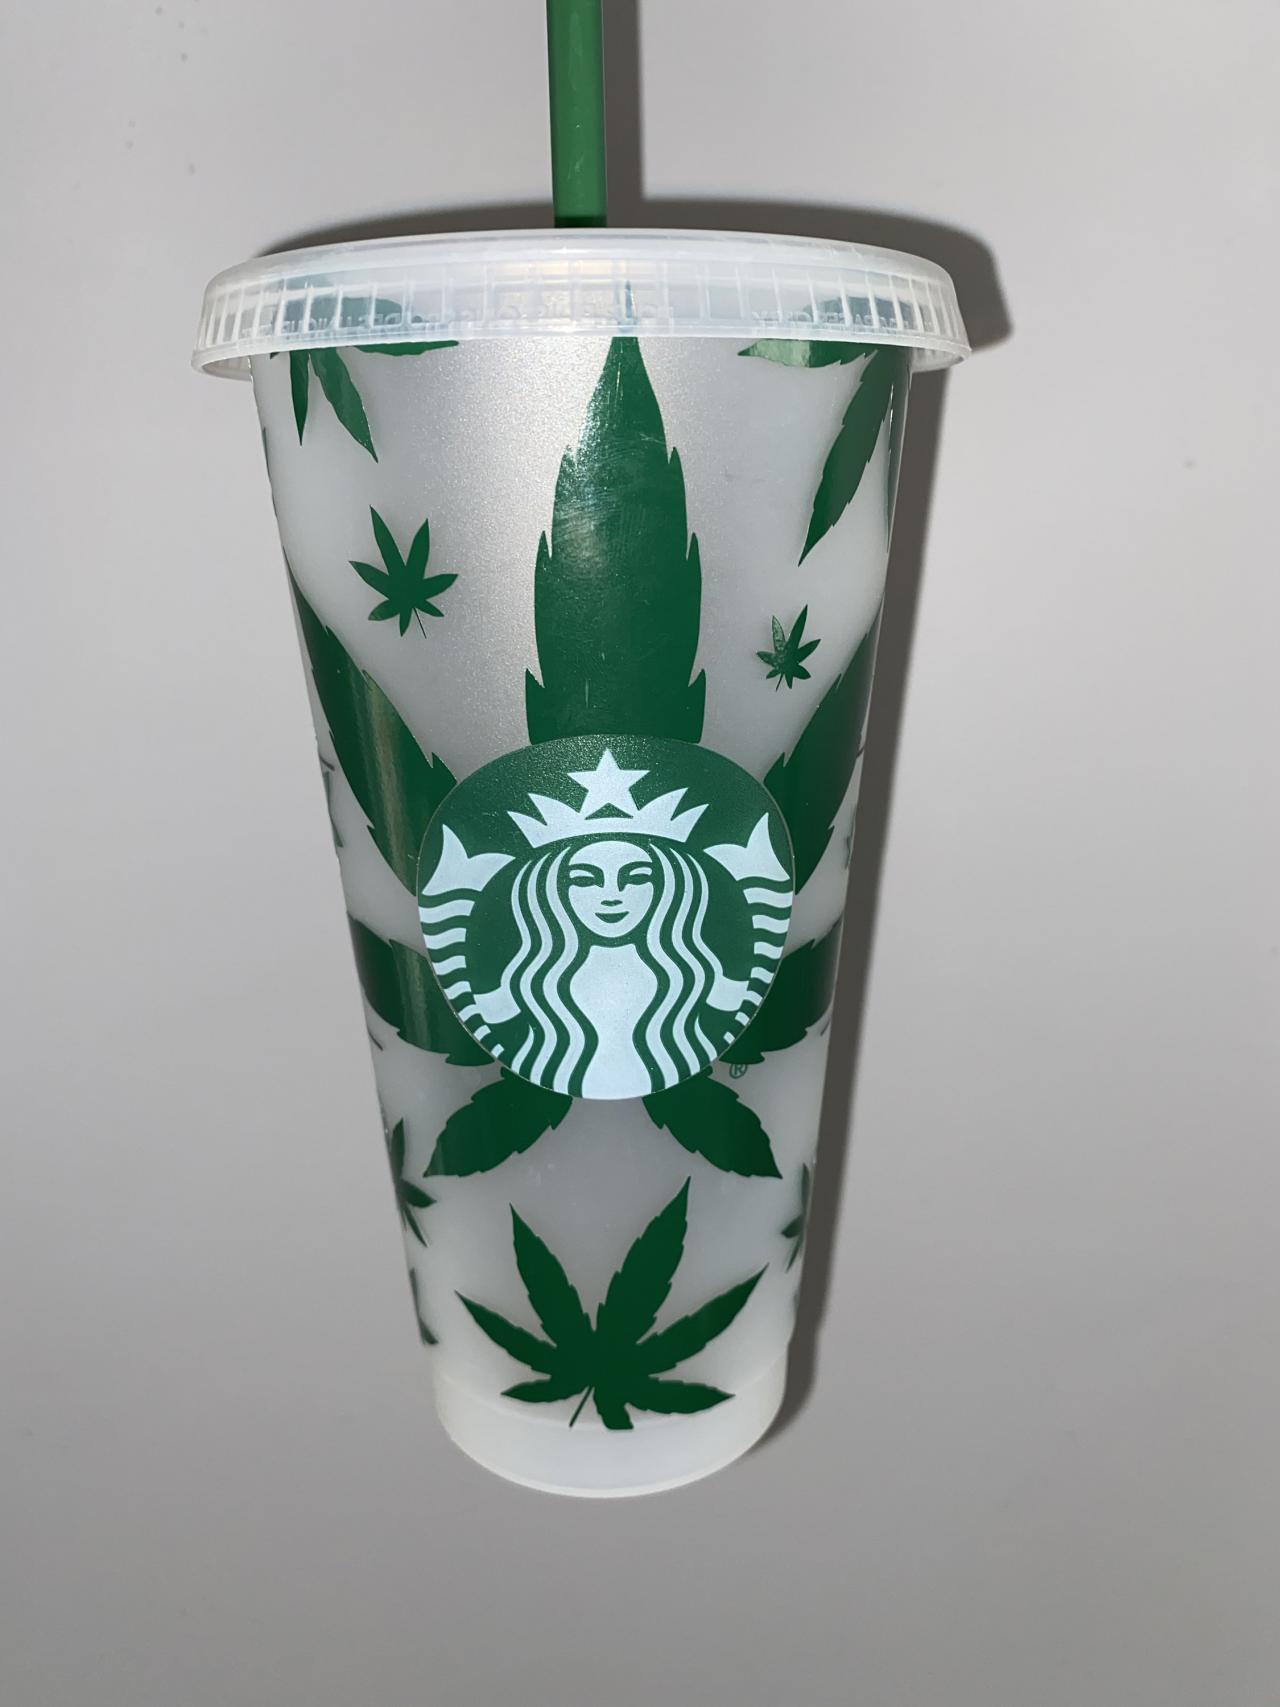 Pot Leaf Starbucks Cup, Starbucks Marijuana Cup, Weed Gift Idea, Pot Head Gift, High Maintenance, Cannabis Coffee Cup, Weed Cup